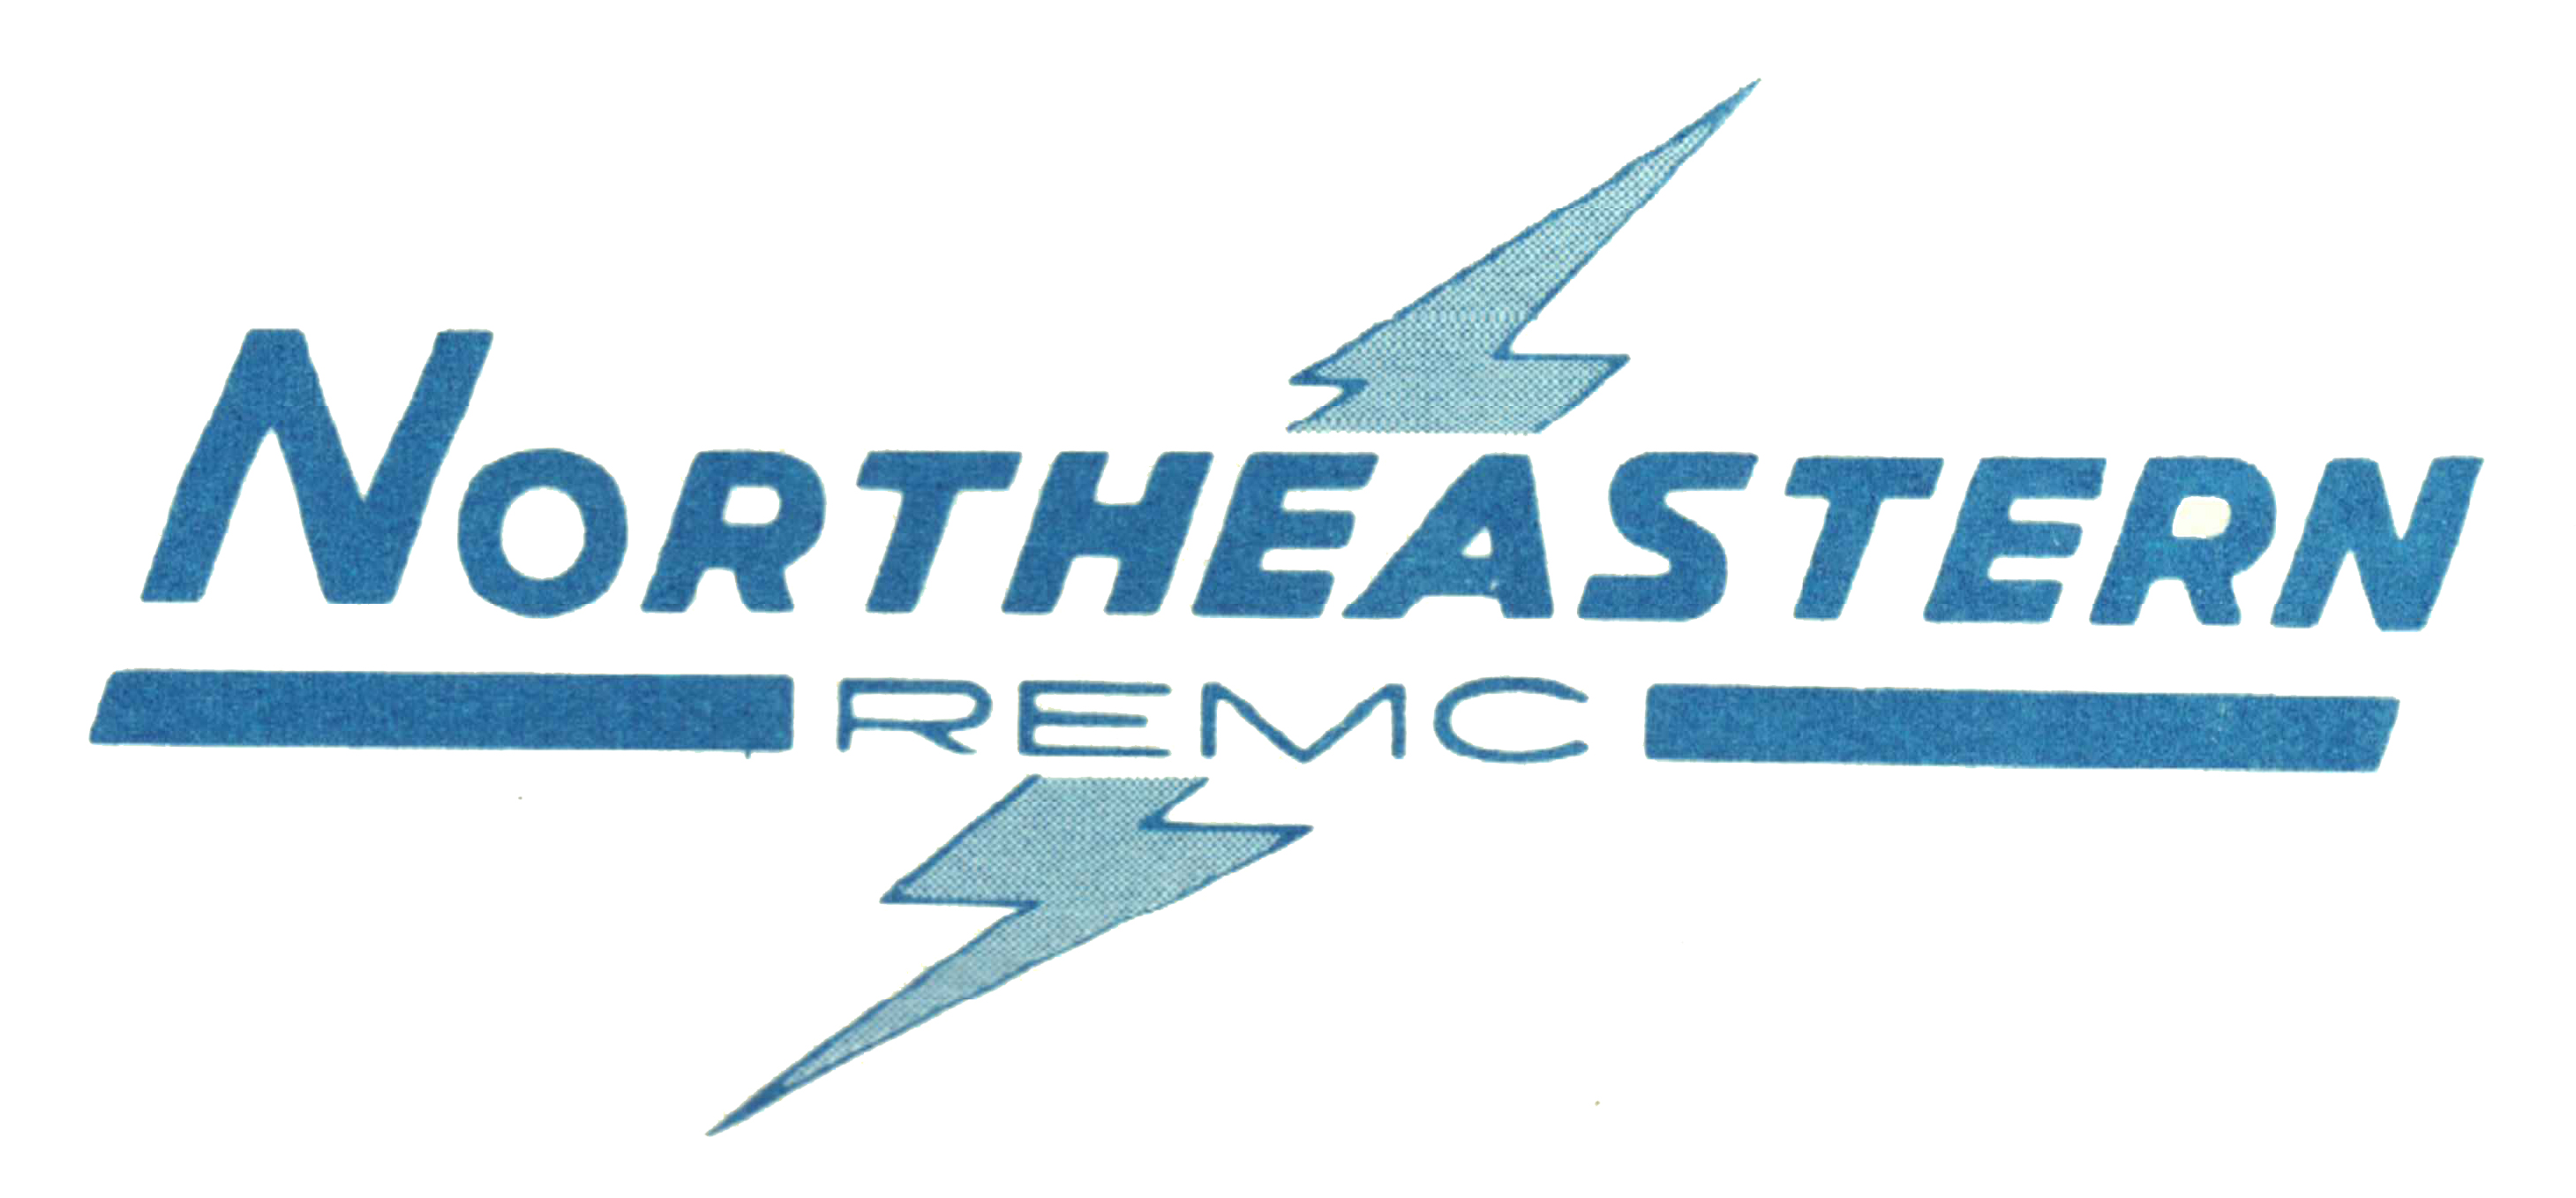 Northeastern Logo in the 80's